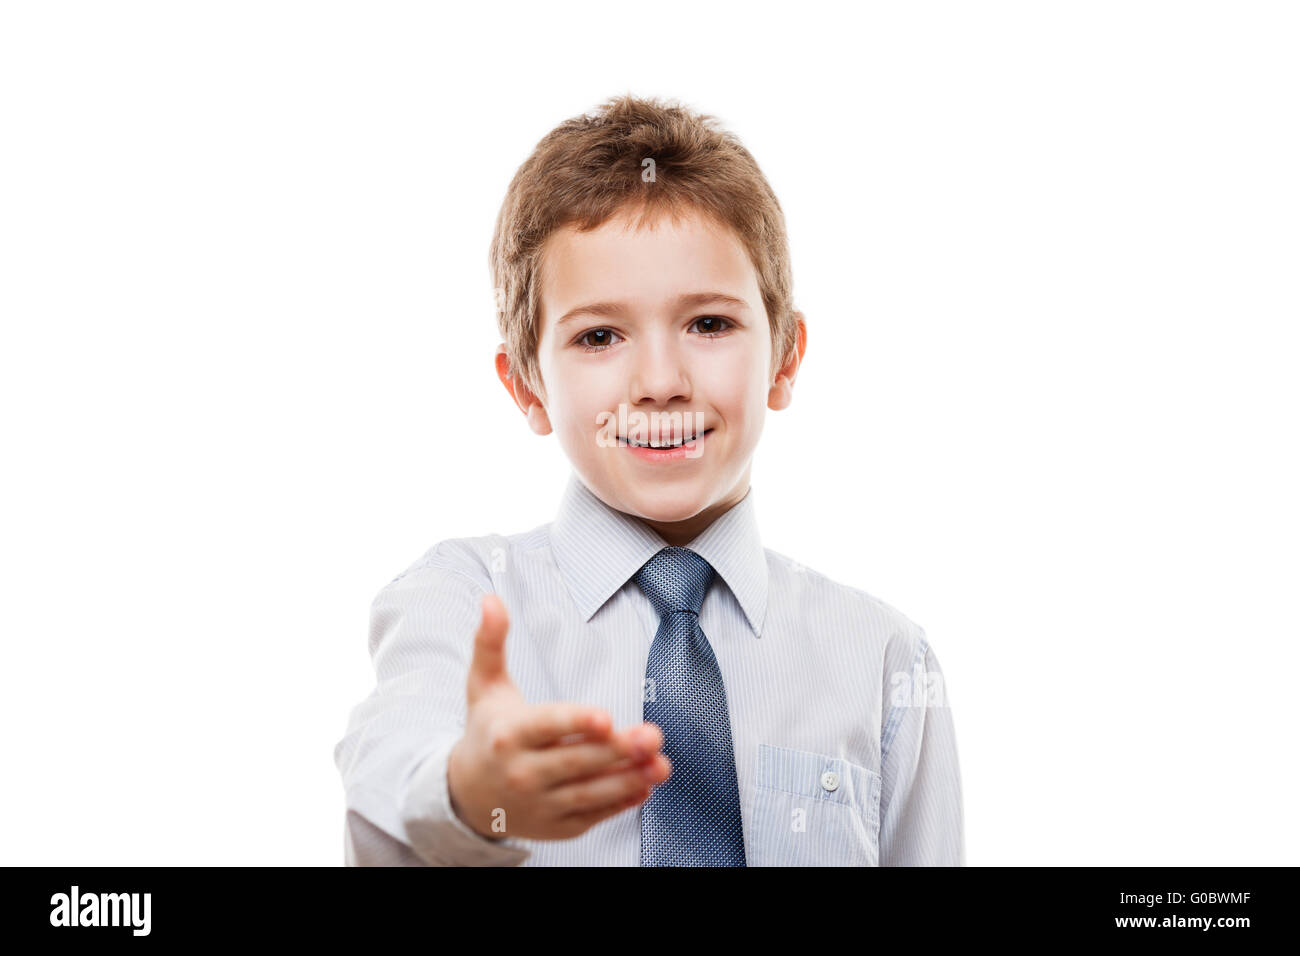 Smiling child boy gesturing hand greeting or meeti Stock Photo